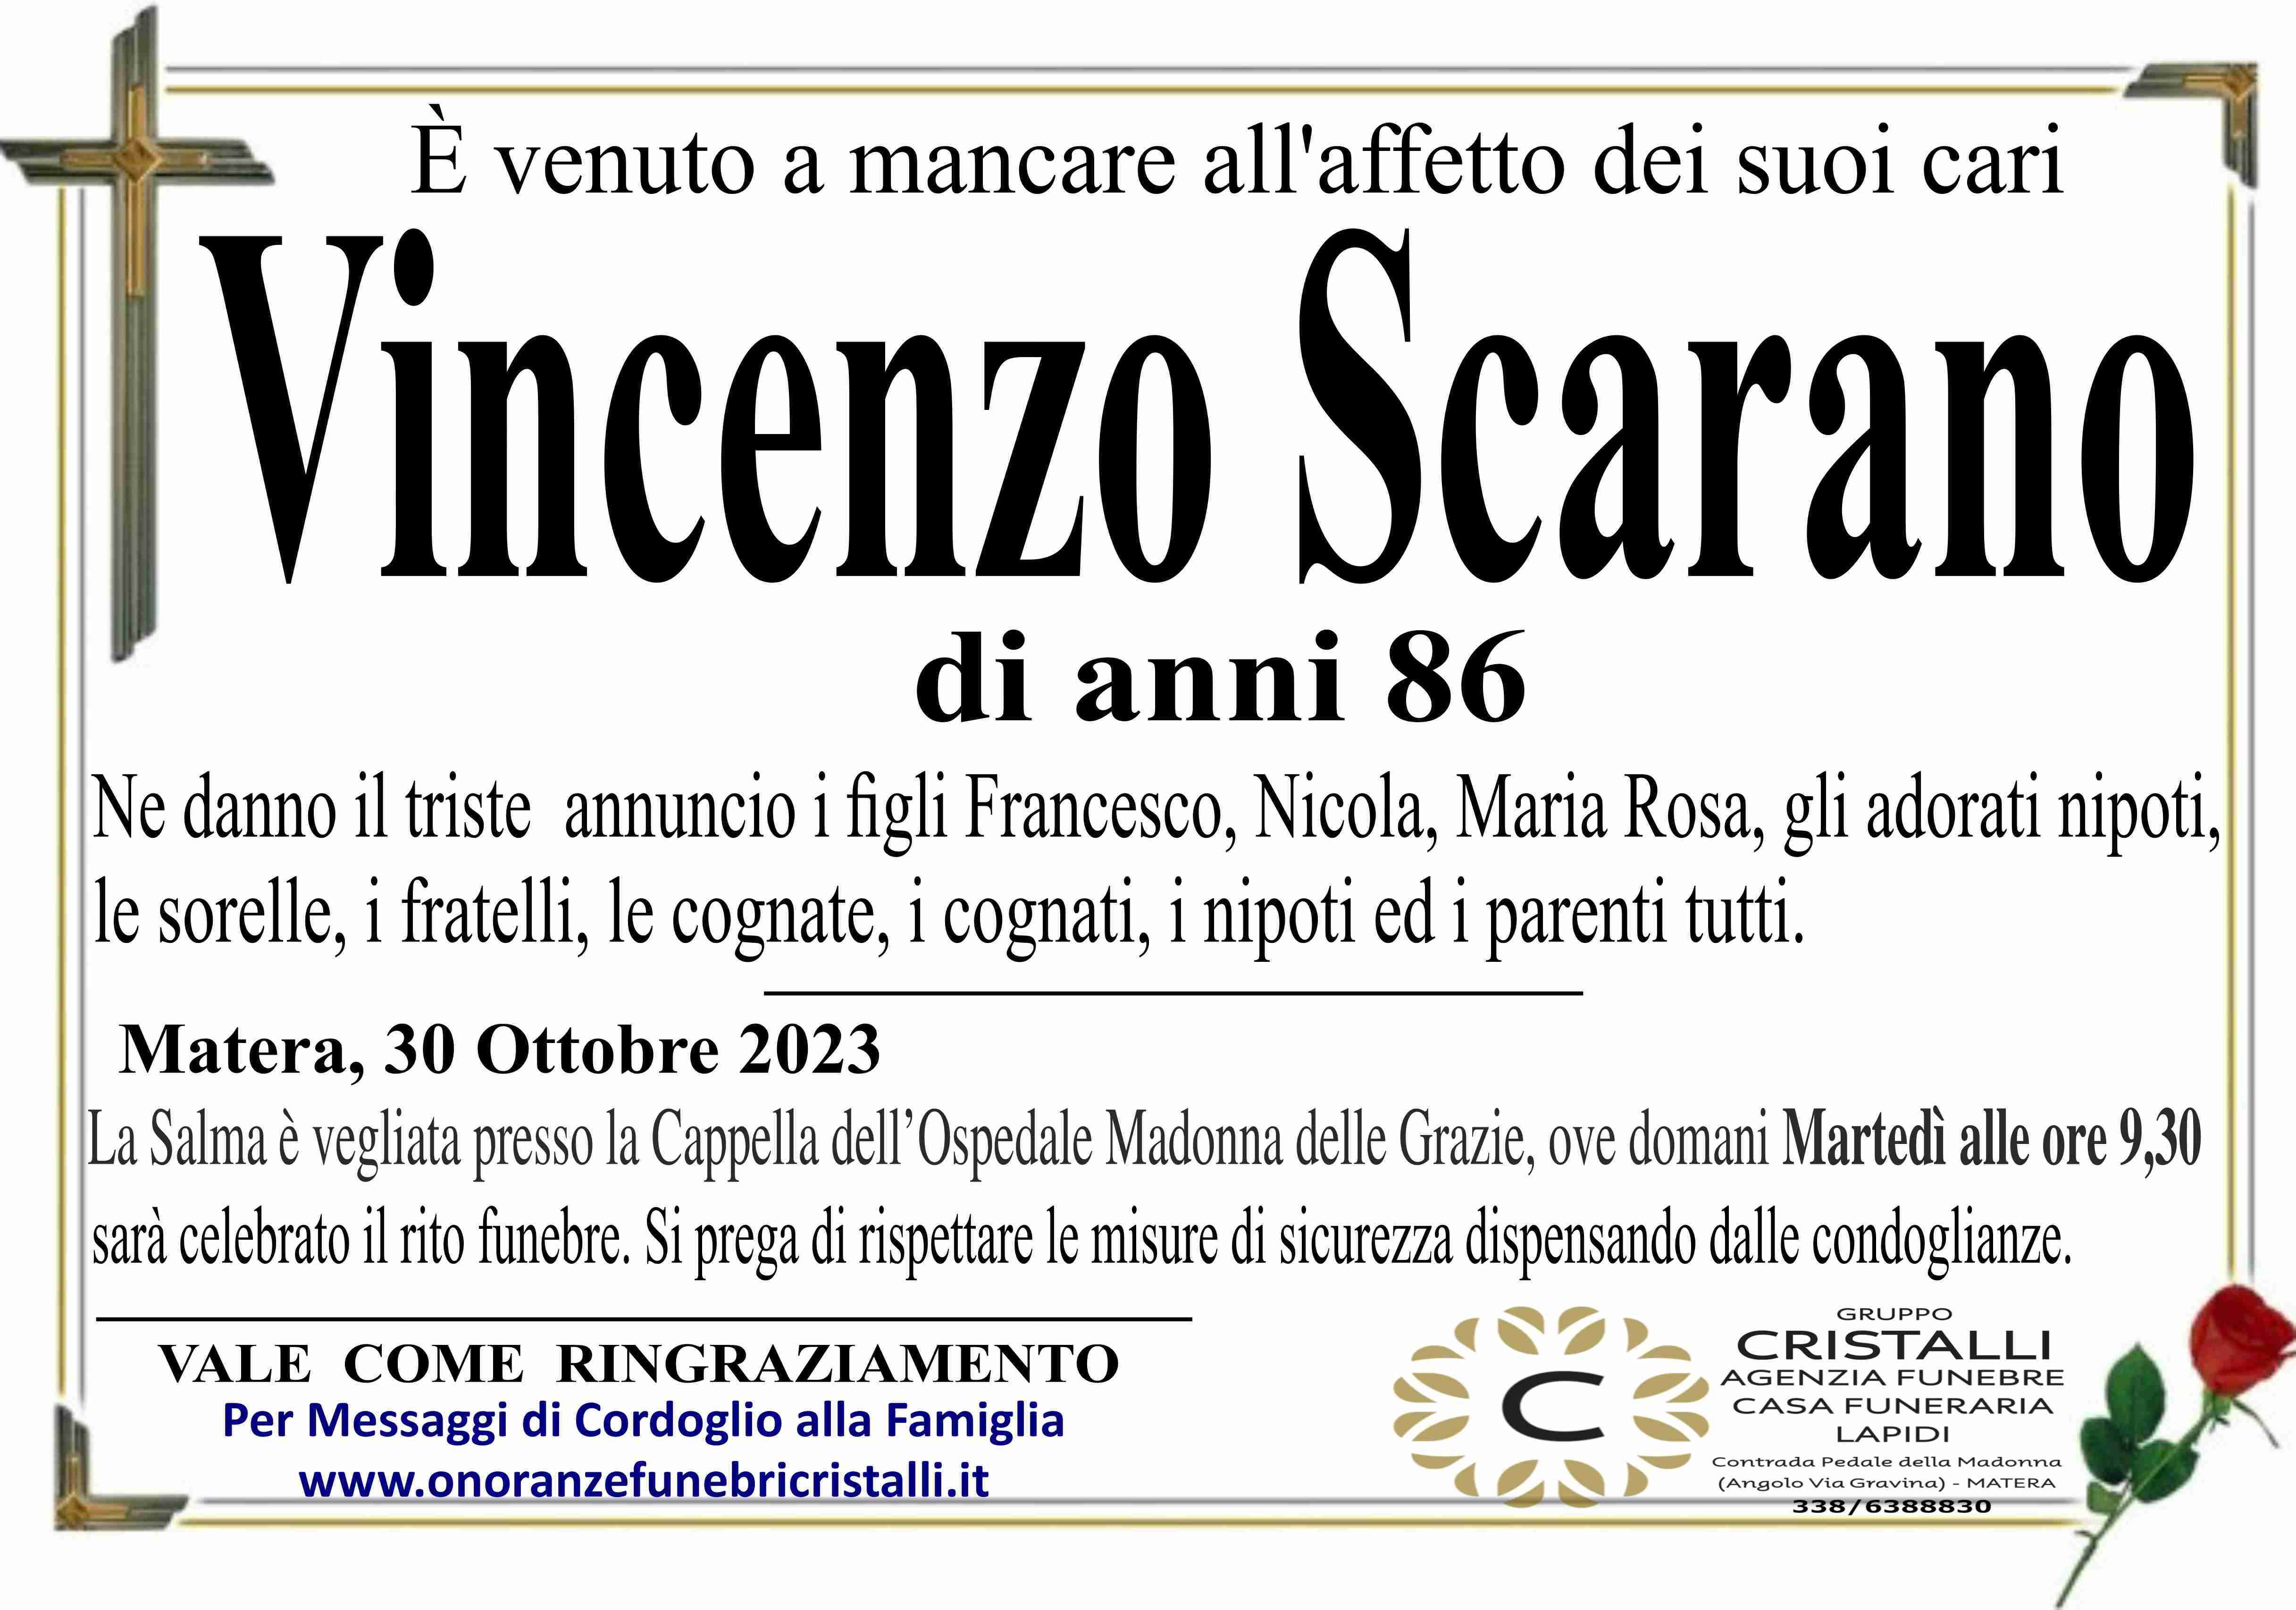 Vincenzo Scarano